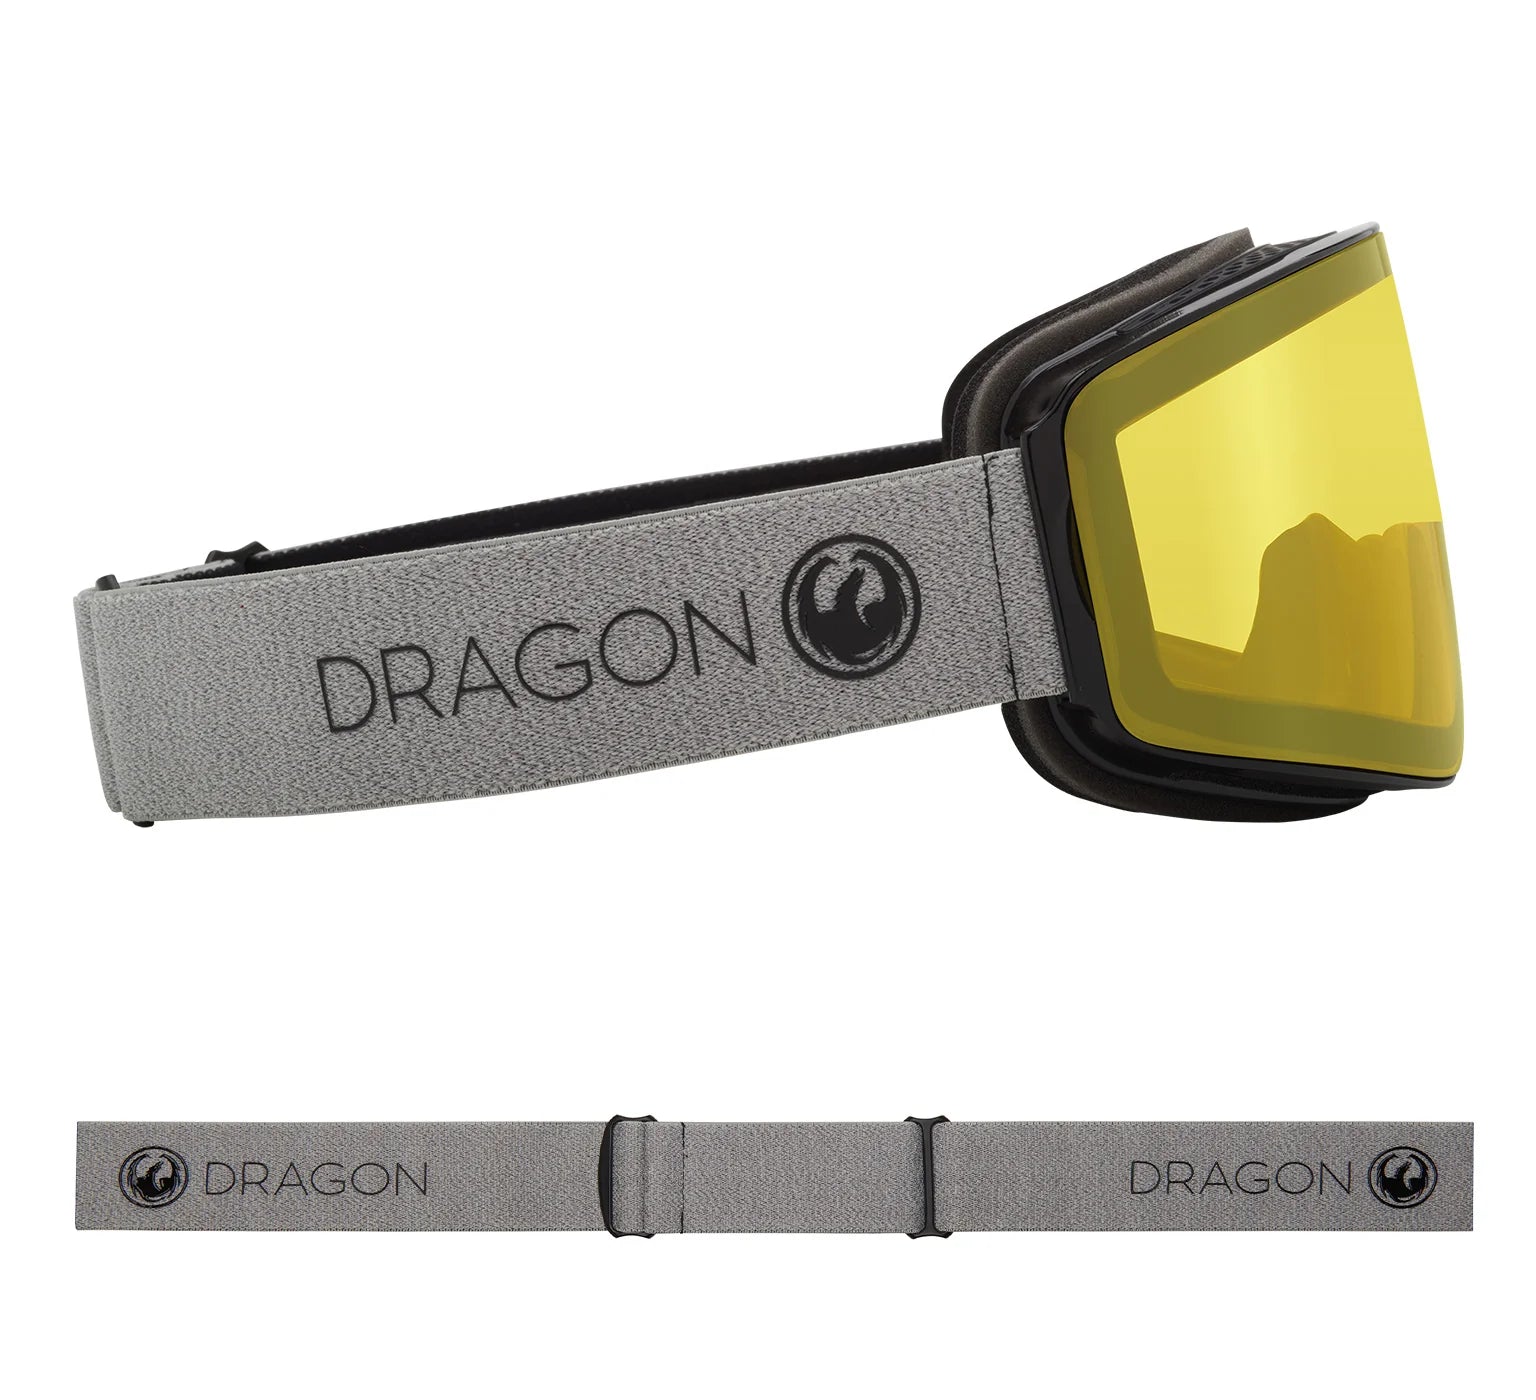 DRAGON PXV - Switch Lumalens Photochromic Yellow Lens Snowboard Goggle 2024